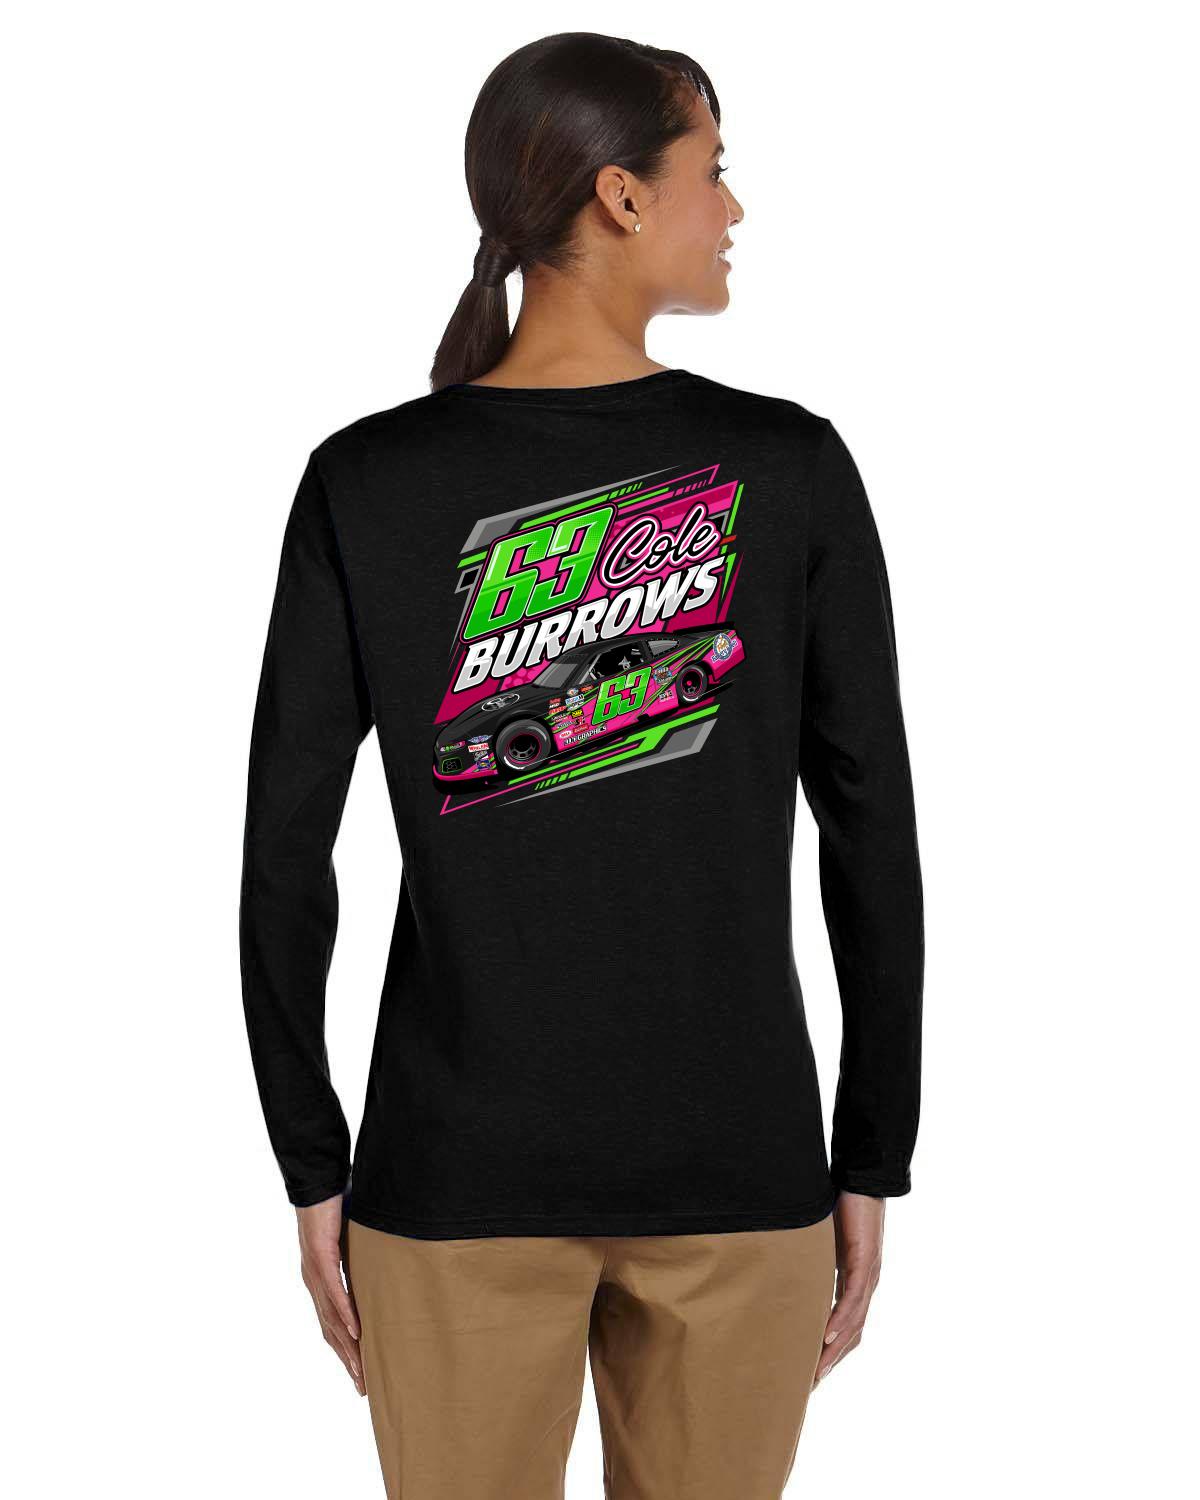 Cole Burrows Racing Ladies' Long-Sleeve T-Shirt